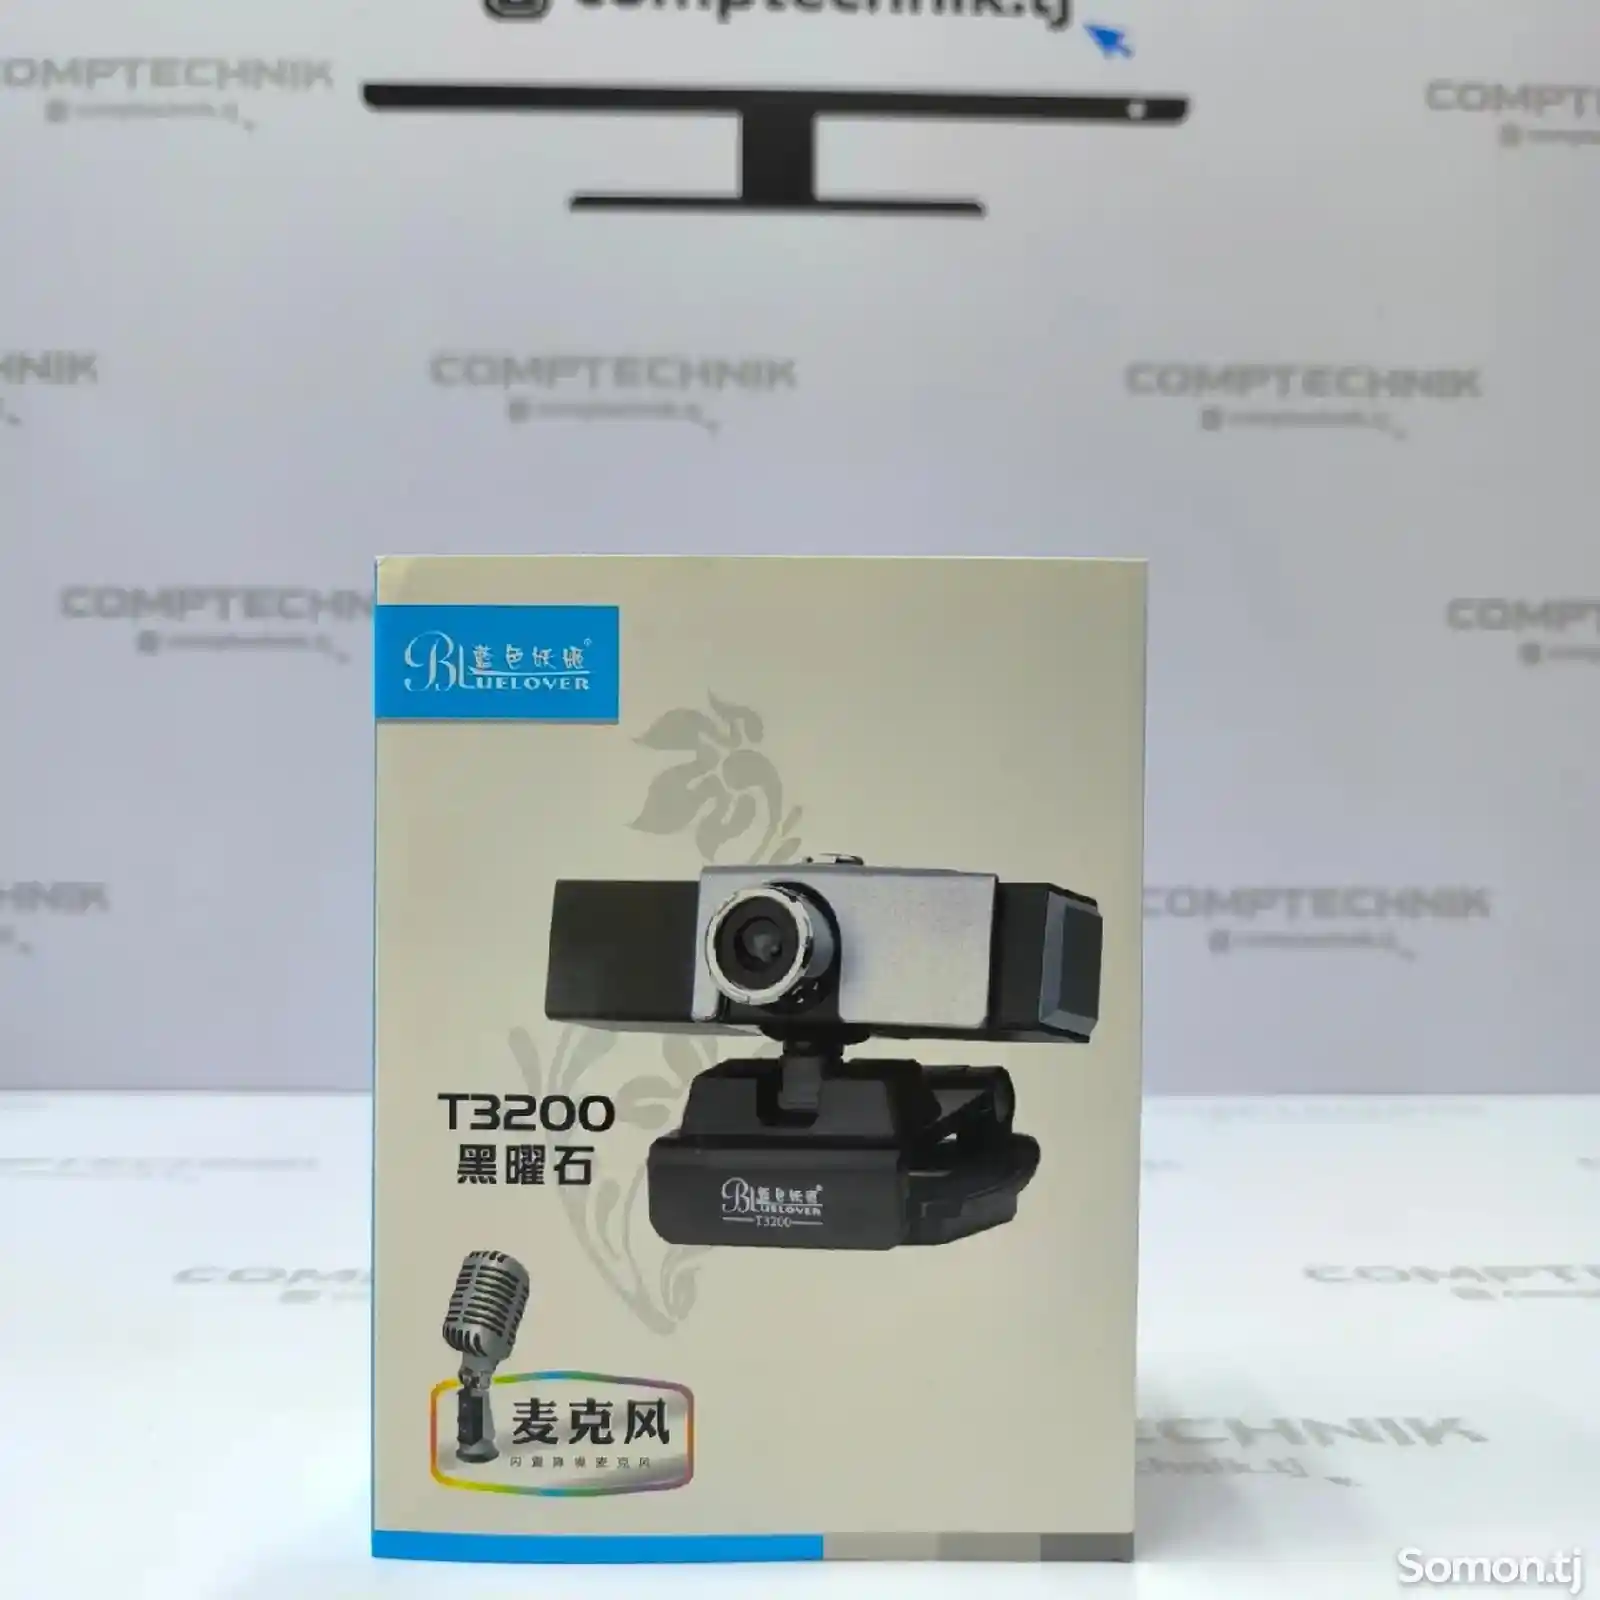 Веб-камера для прямых трансляций Bluelover T3200-2